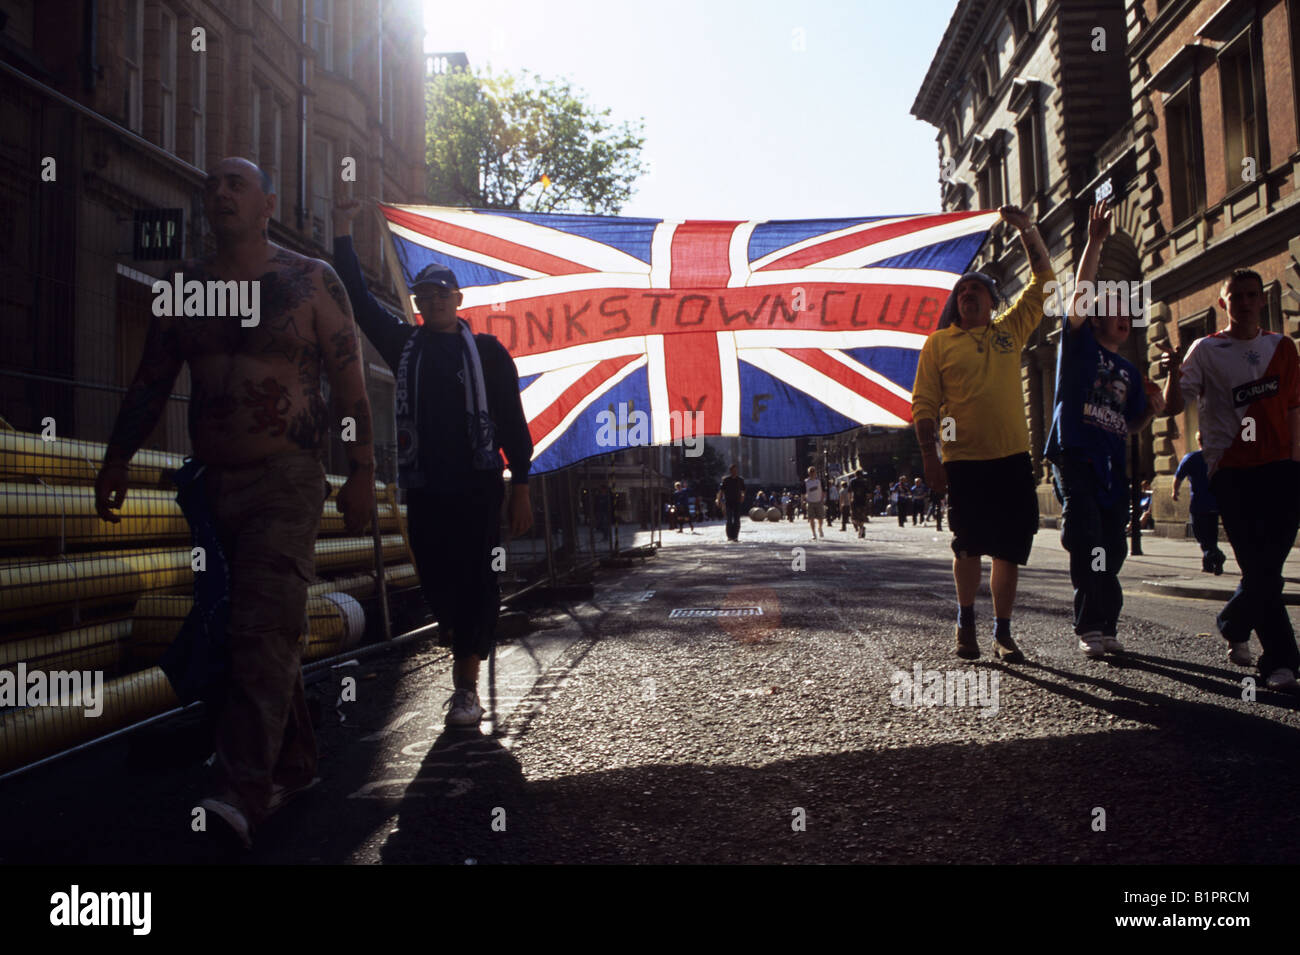 Rangers tifosi tenendo un Monkstown bandiera in Manchester Foto Stock